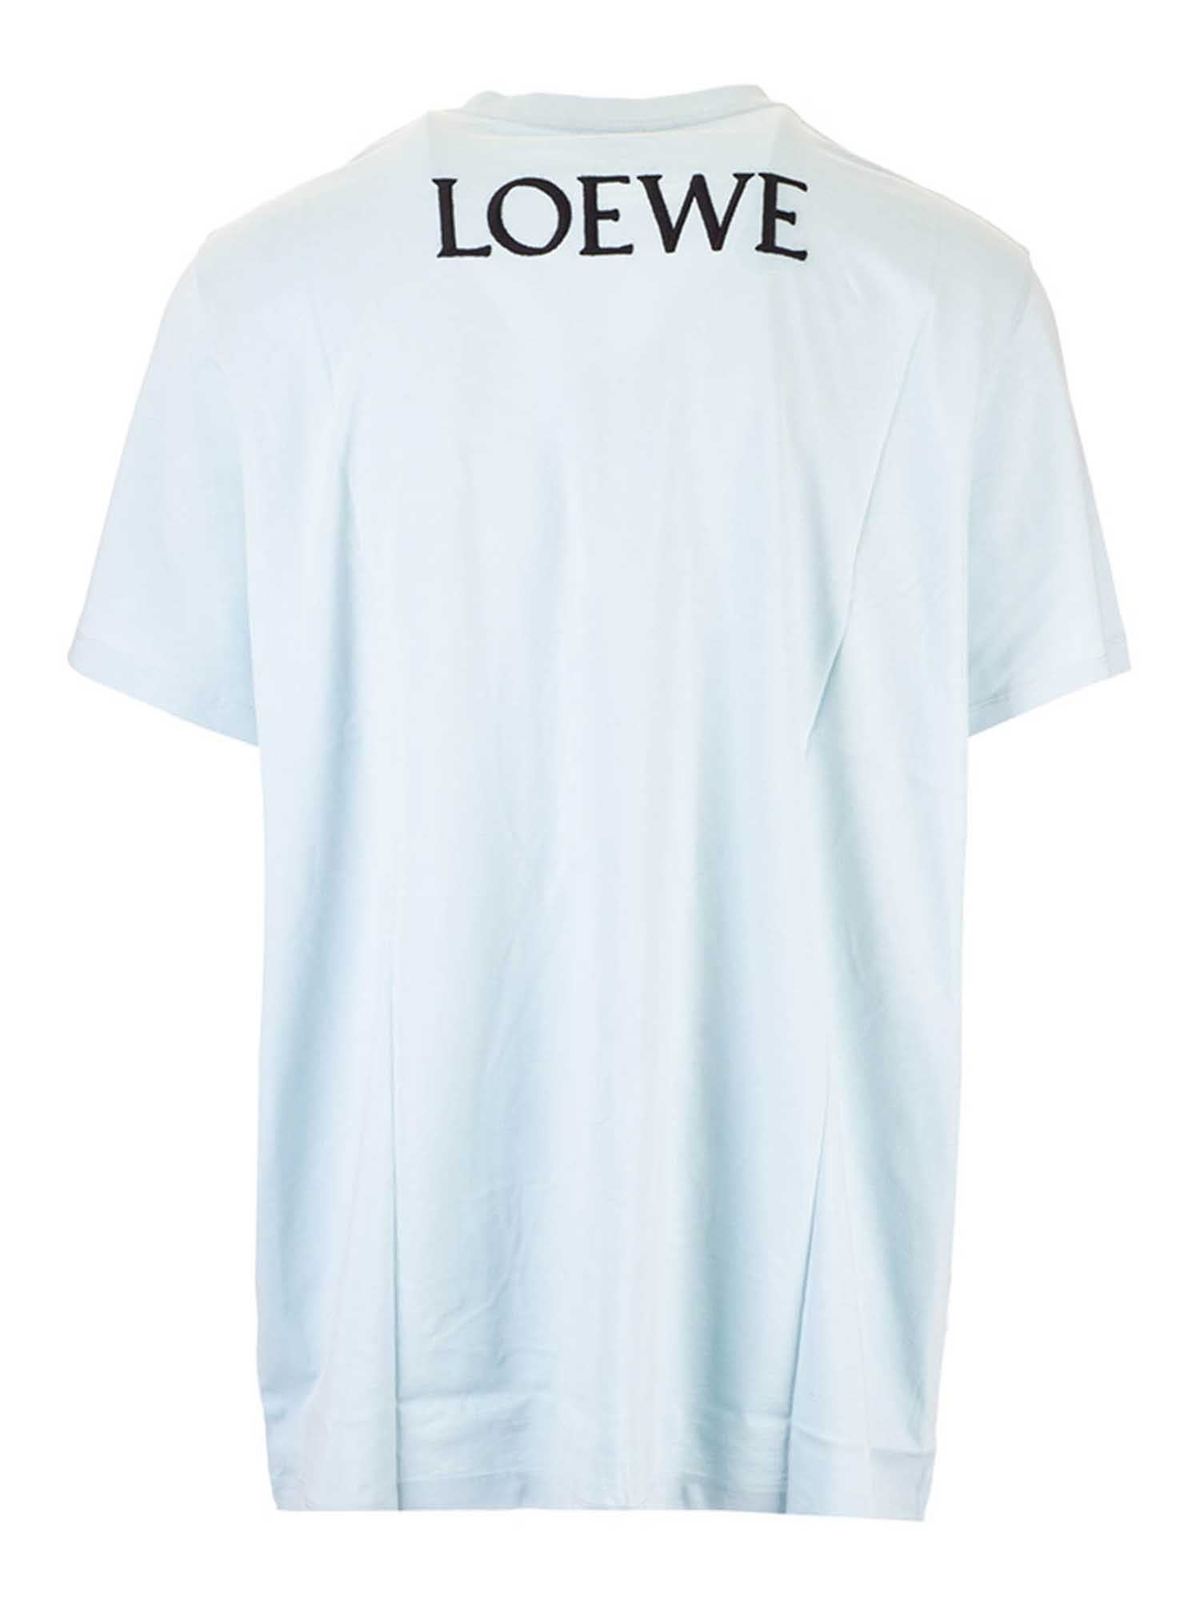 loewe shirts